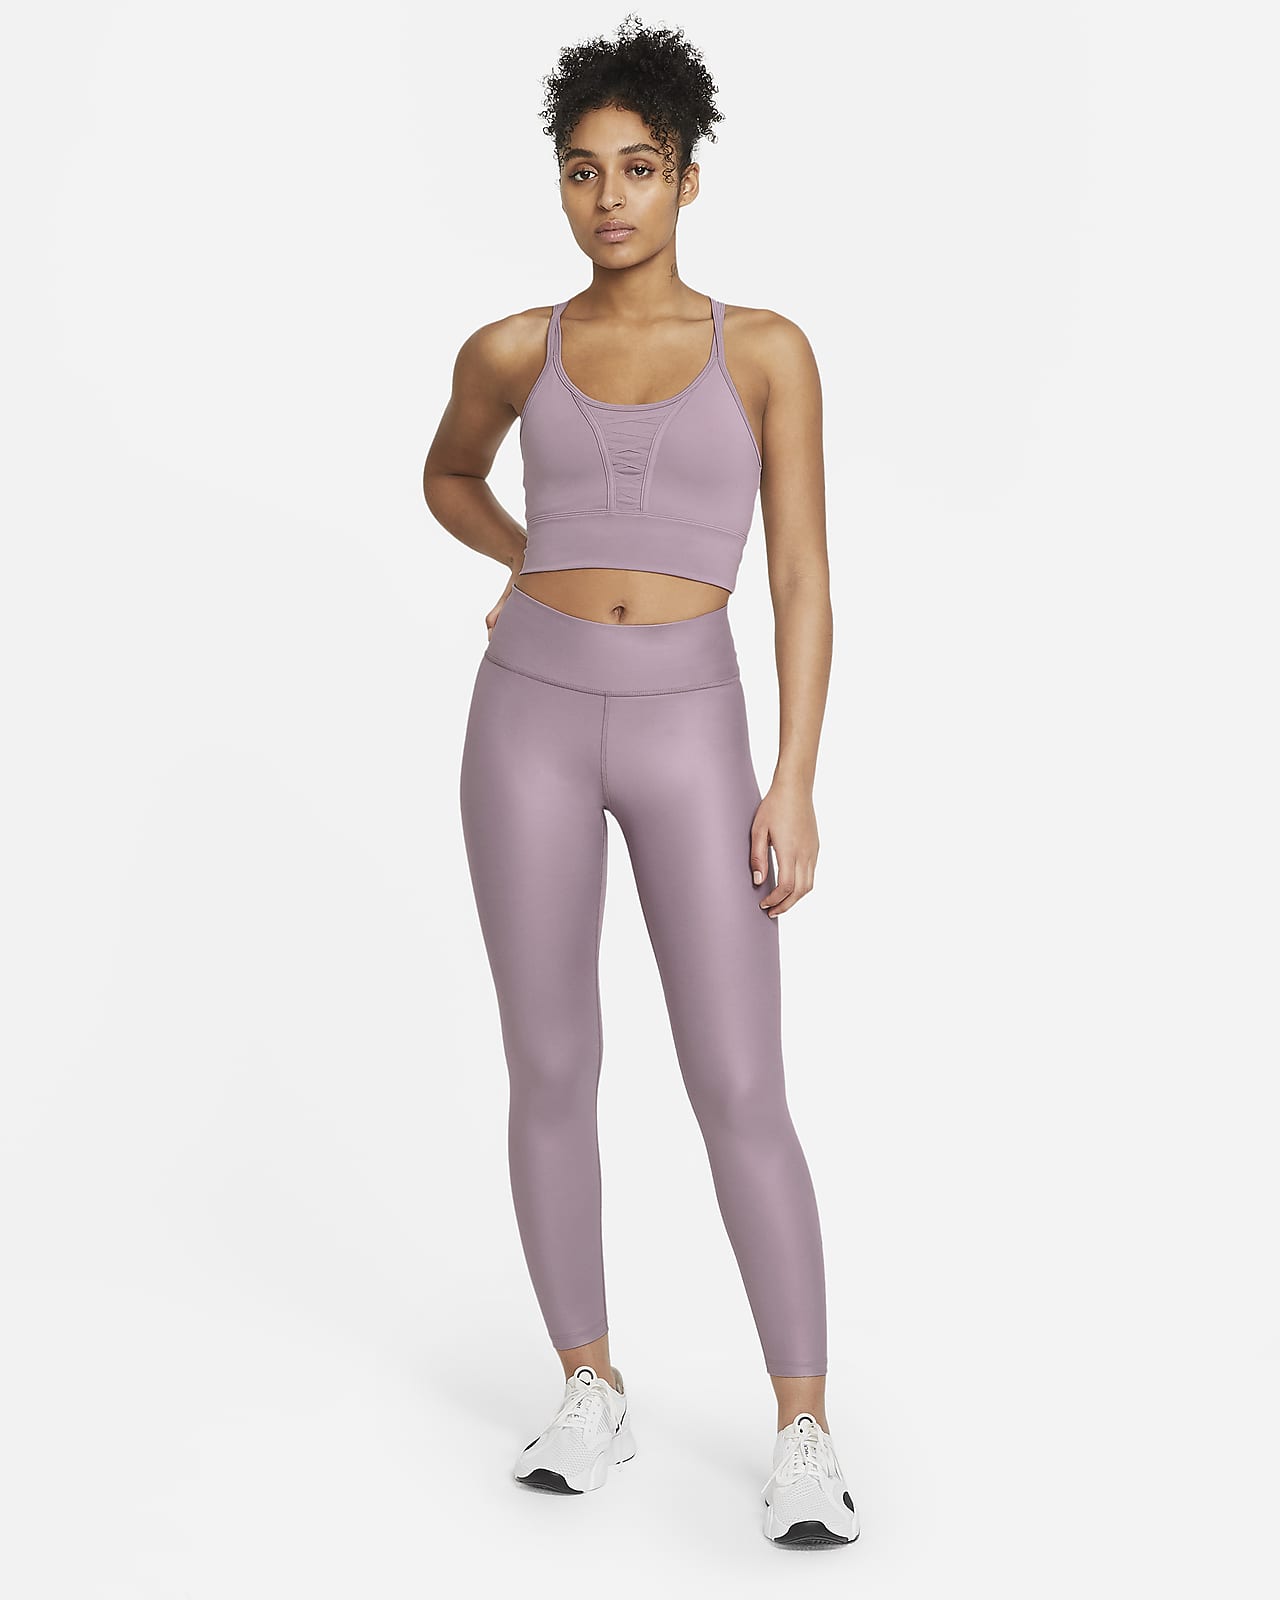 dark purple nike leggings